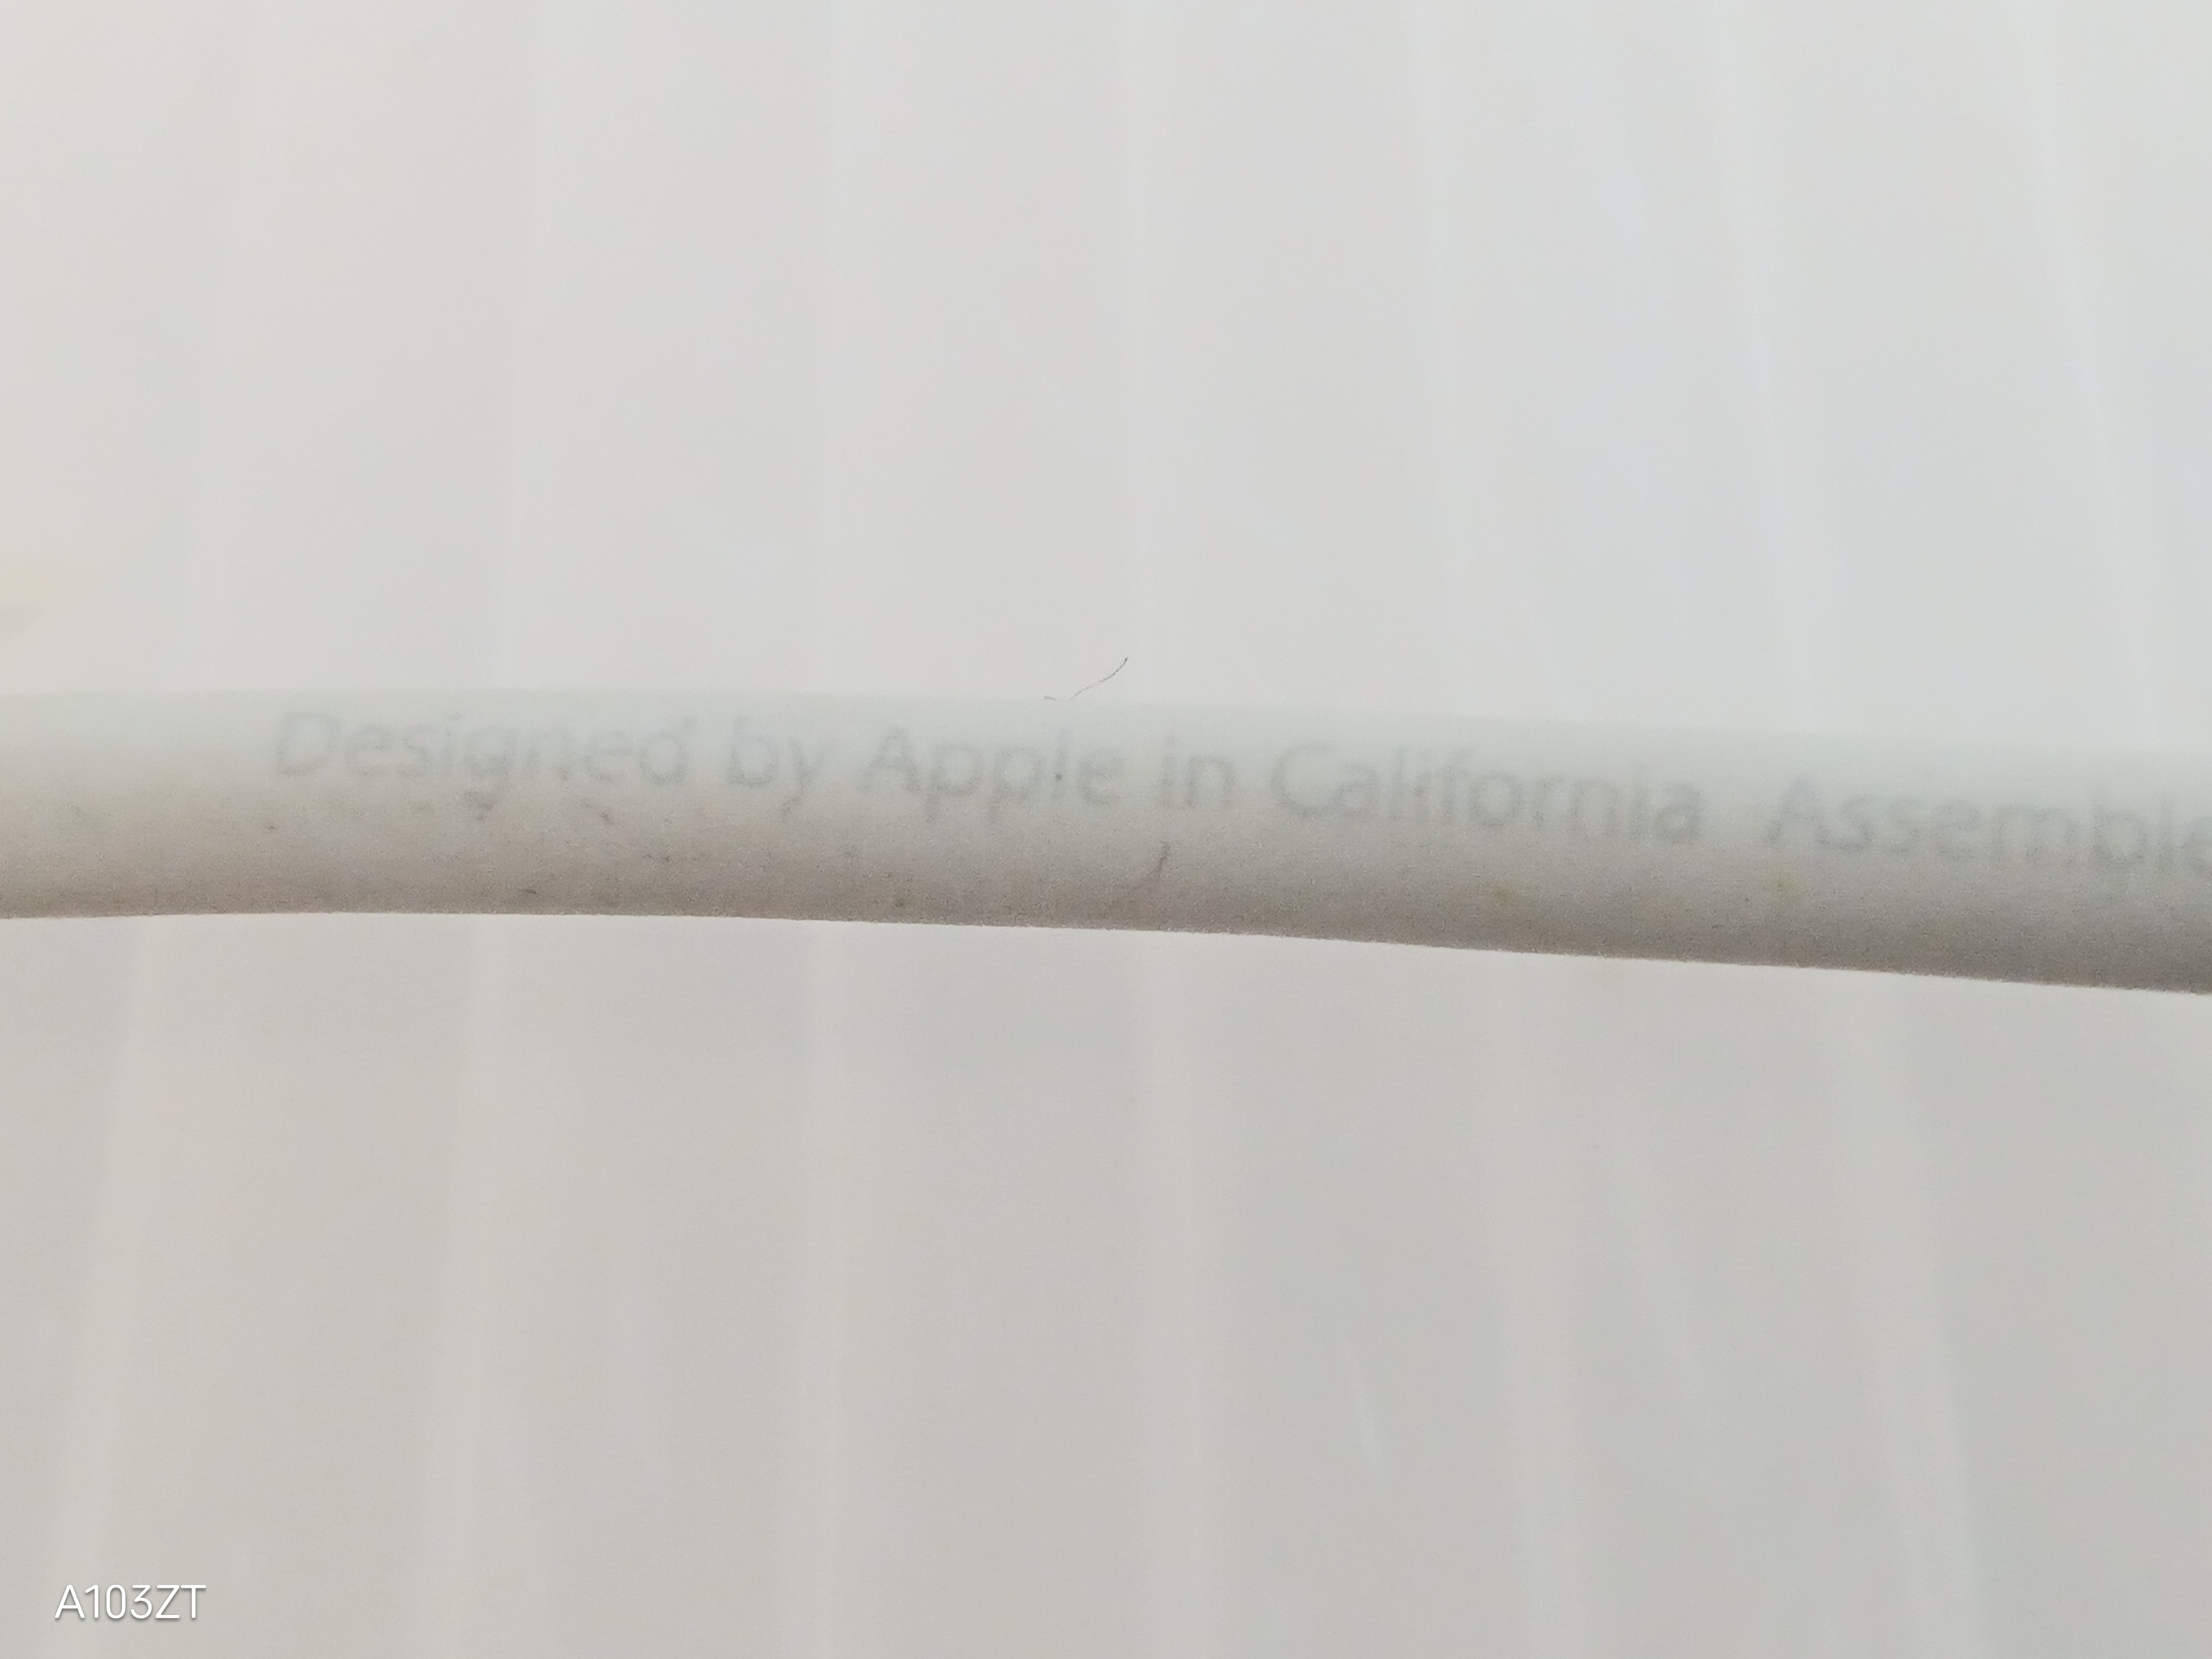  Apple original lightning cable 1m USB-C# Apple Apple# lightning Lightning#(6)